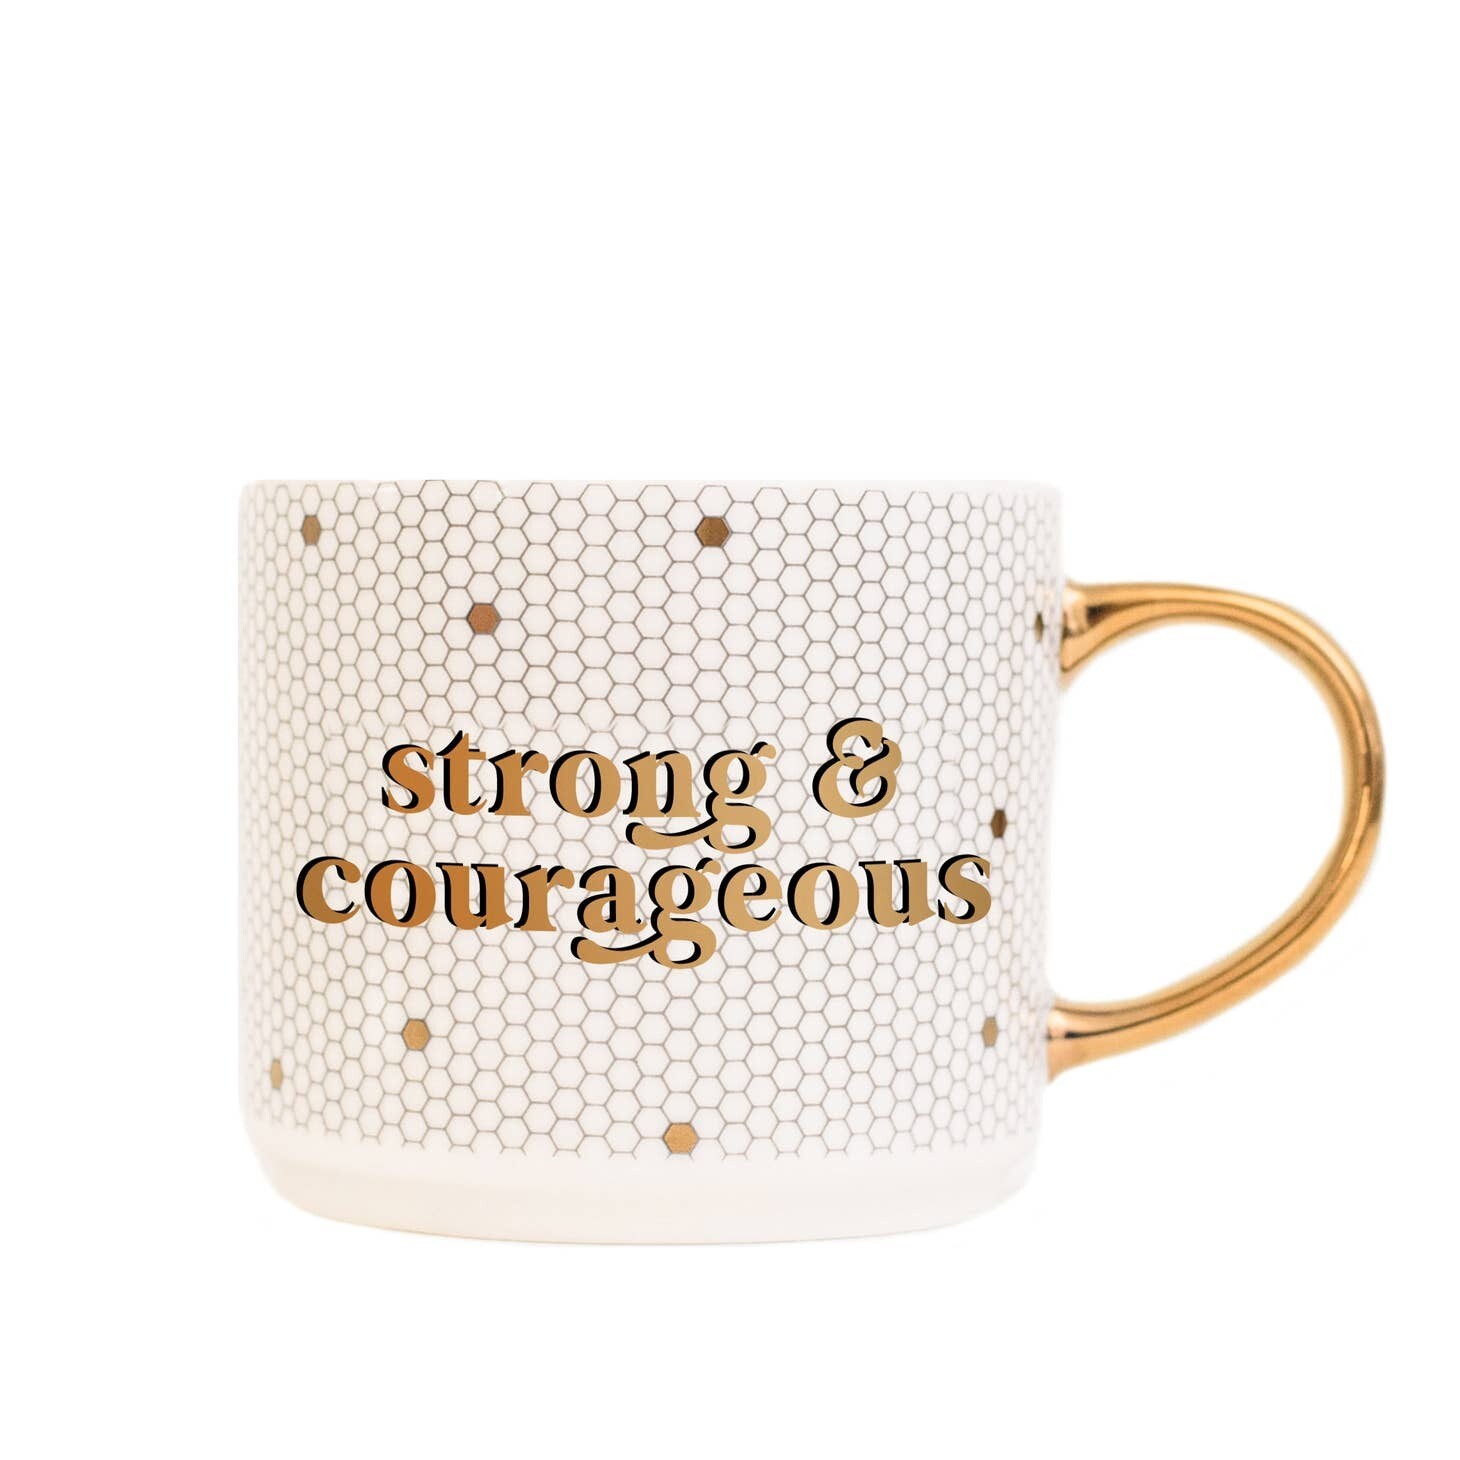 Strong and Courageous - Gold, White Tile Coffee Mug - 17 oz